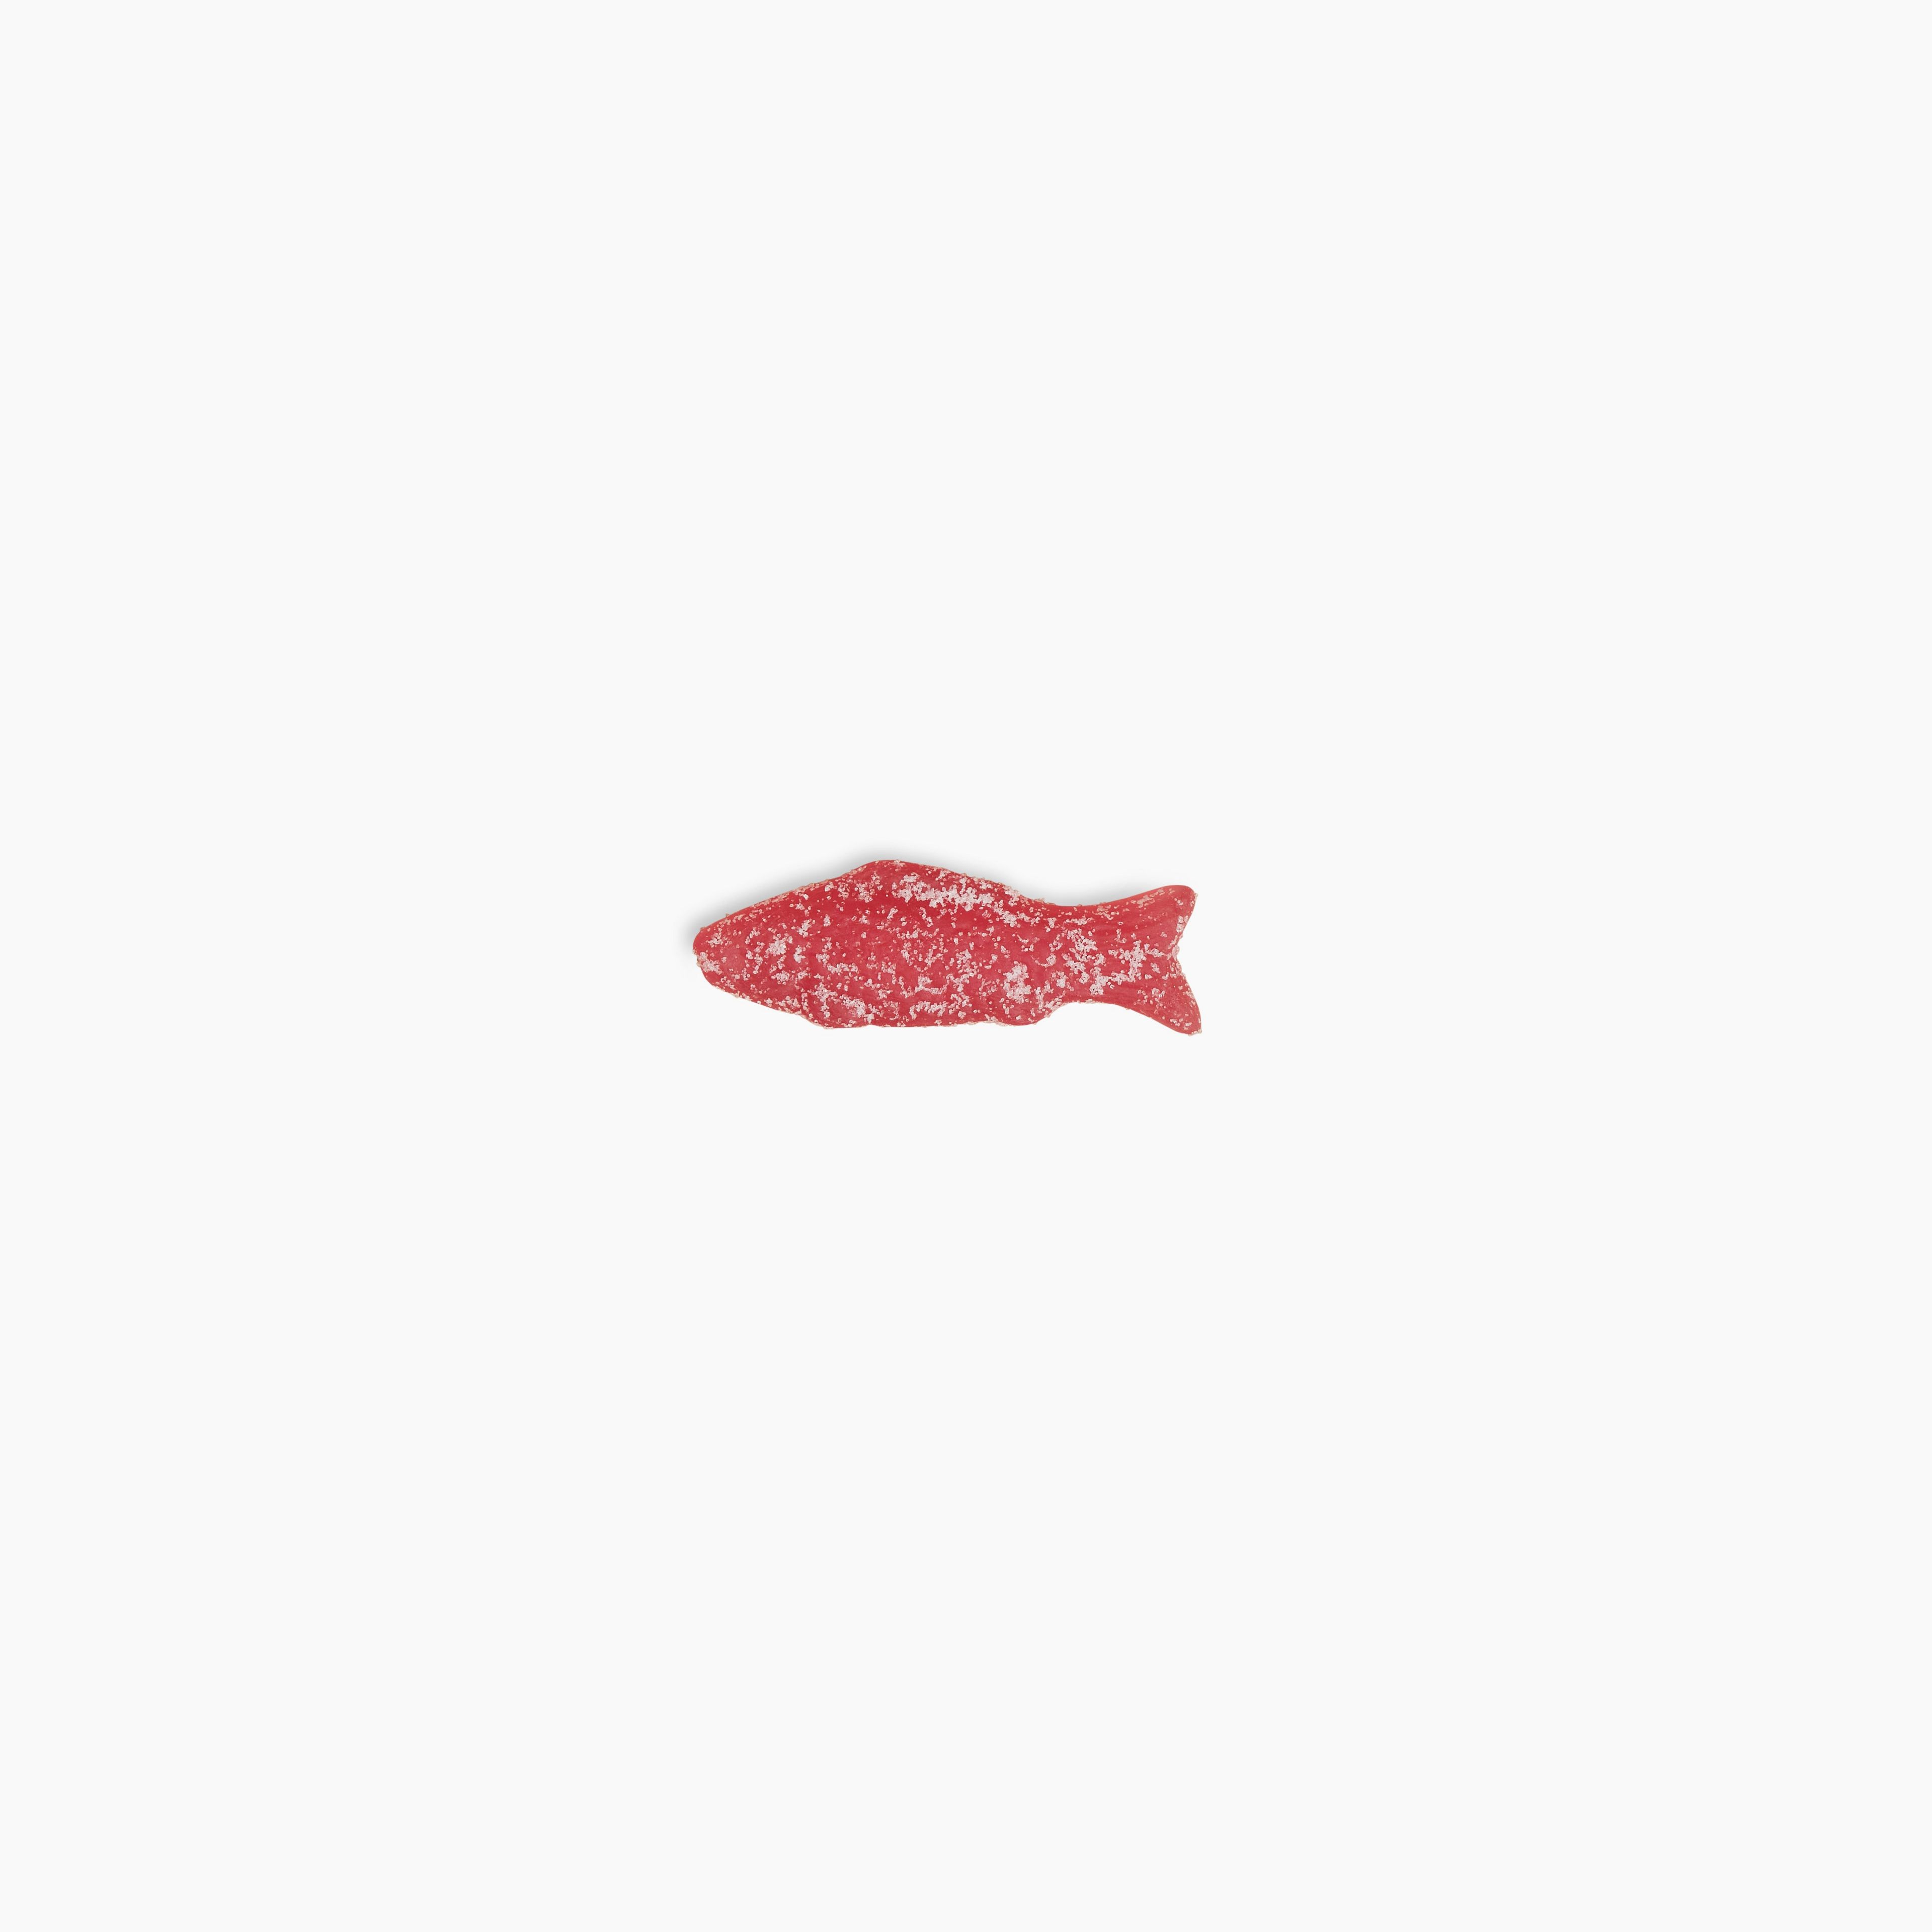 Sour Raspberry Fish